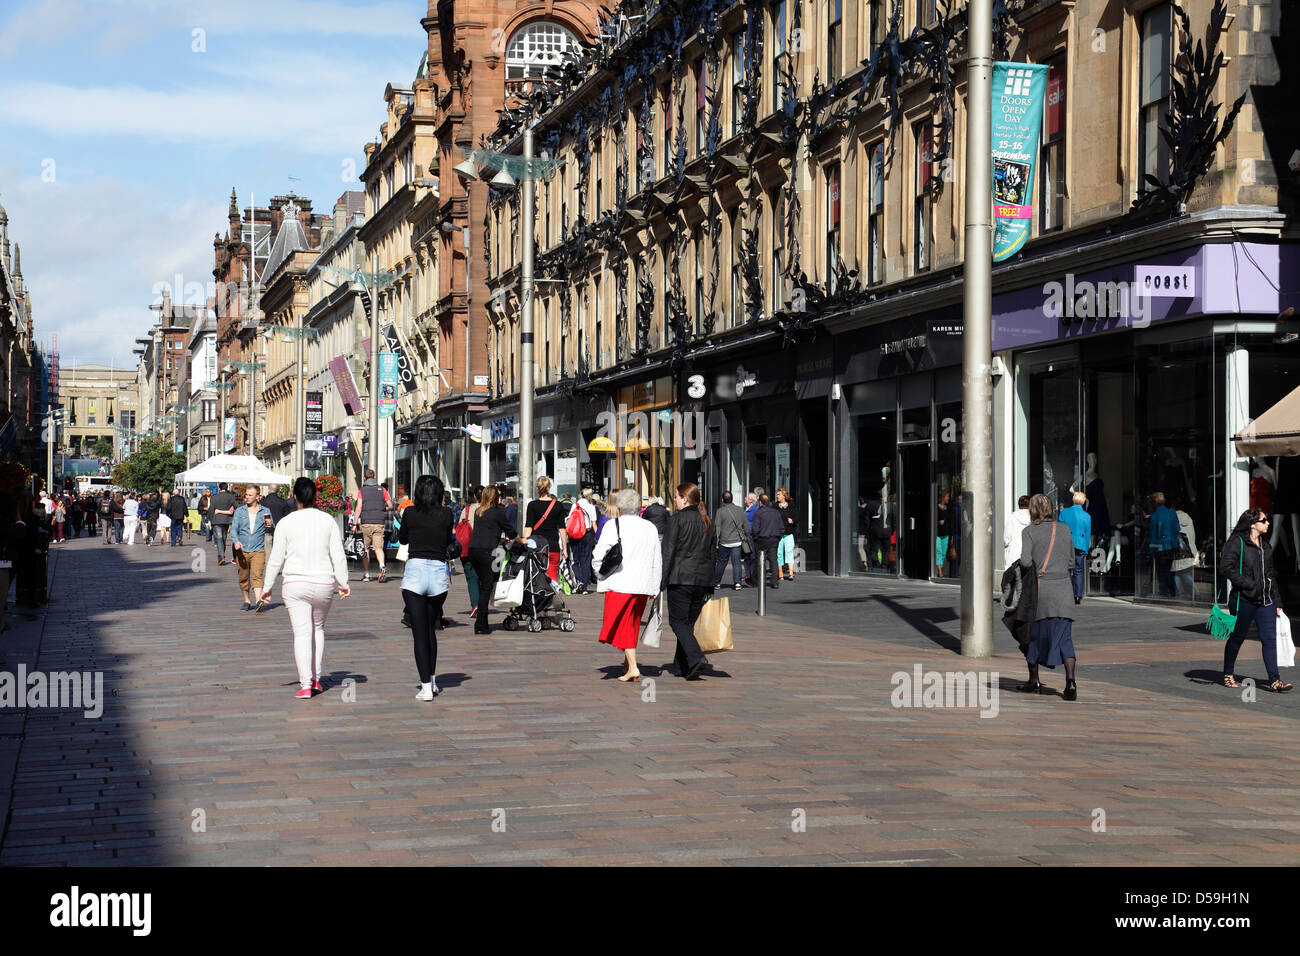 Buchanan Street Glasgow, pedestrian shopping precinct in the city centre, Scotland, UK Stock Photo